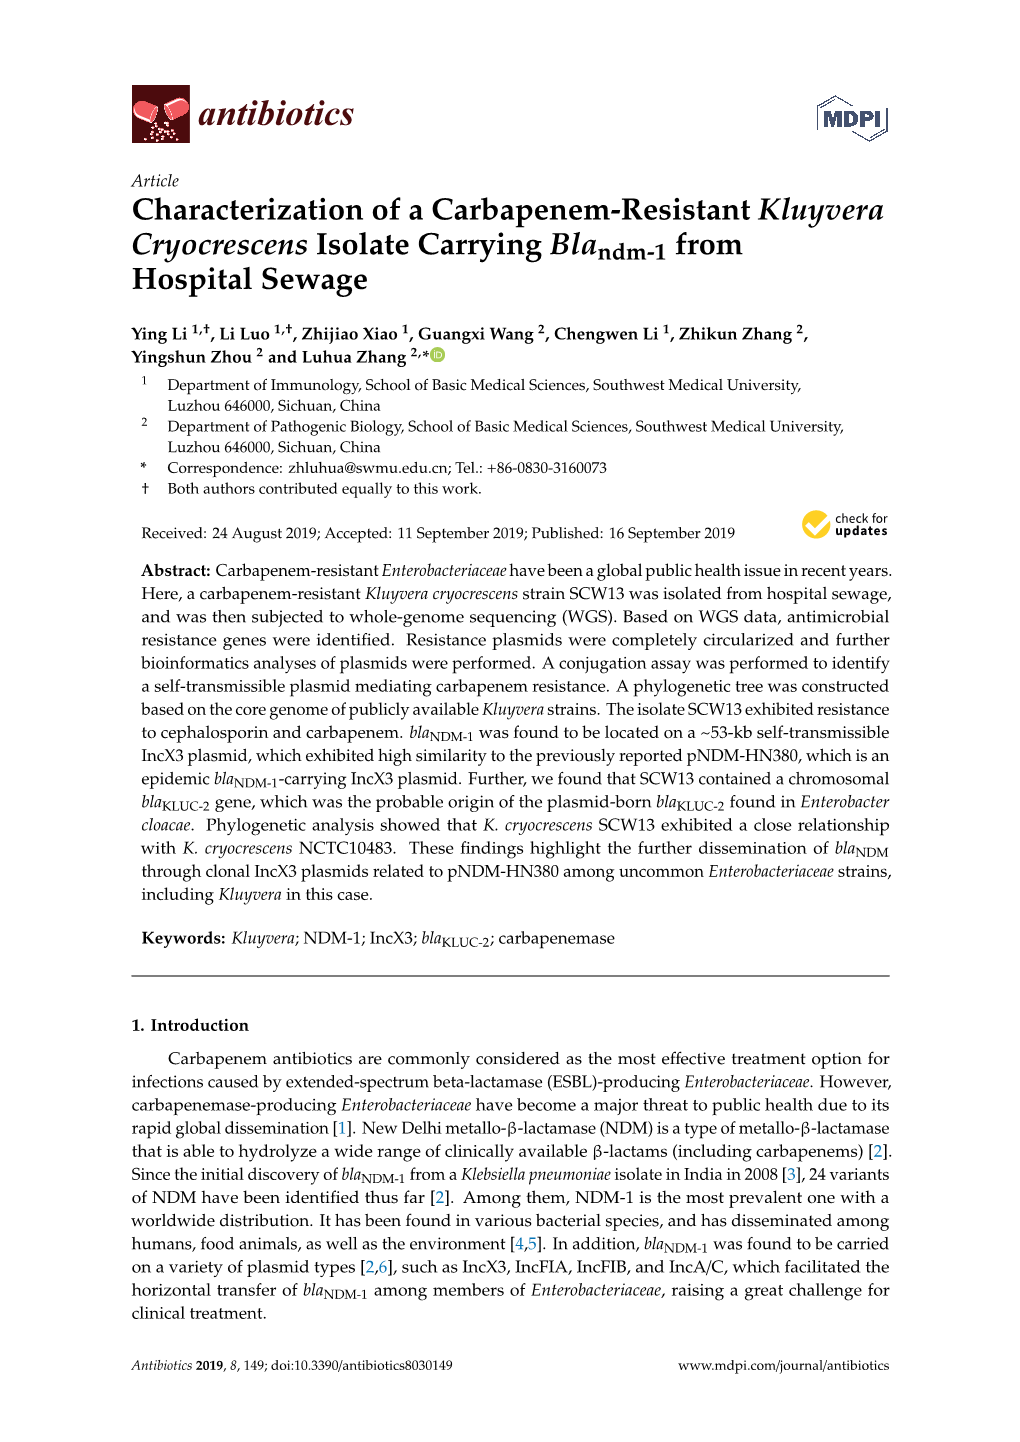 Characterization of a Carbapenem-Resistant Kluyvera Cryocrescens Isolate Carrying Blandm-From Hospital Sewage